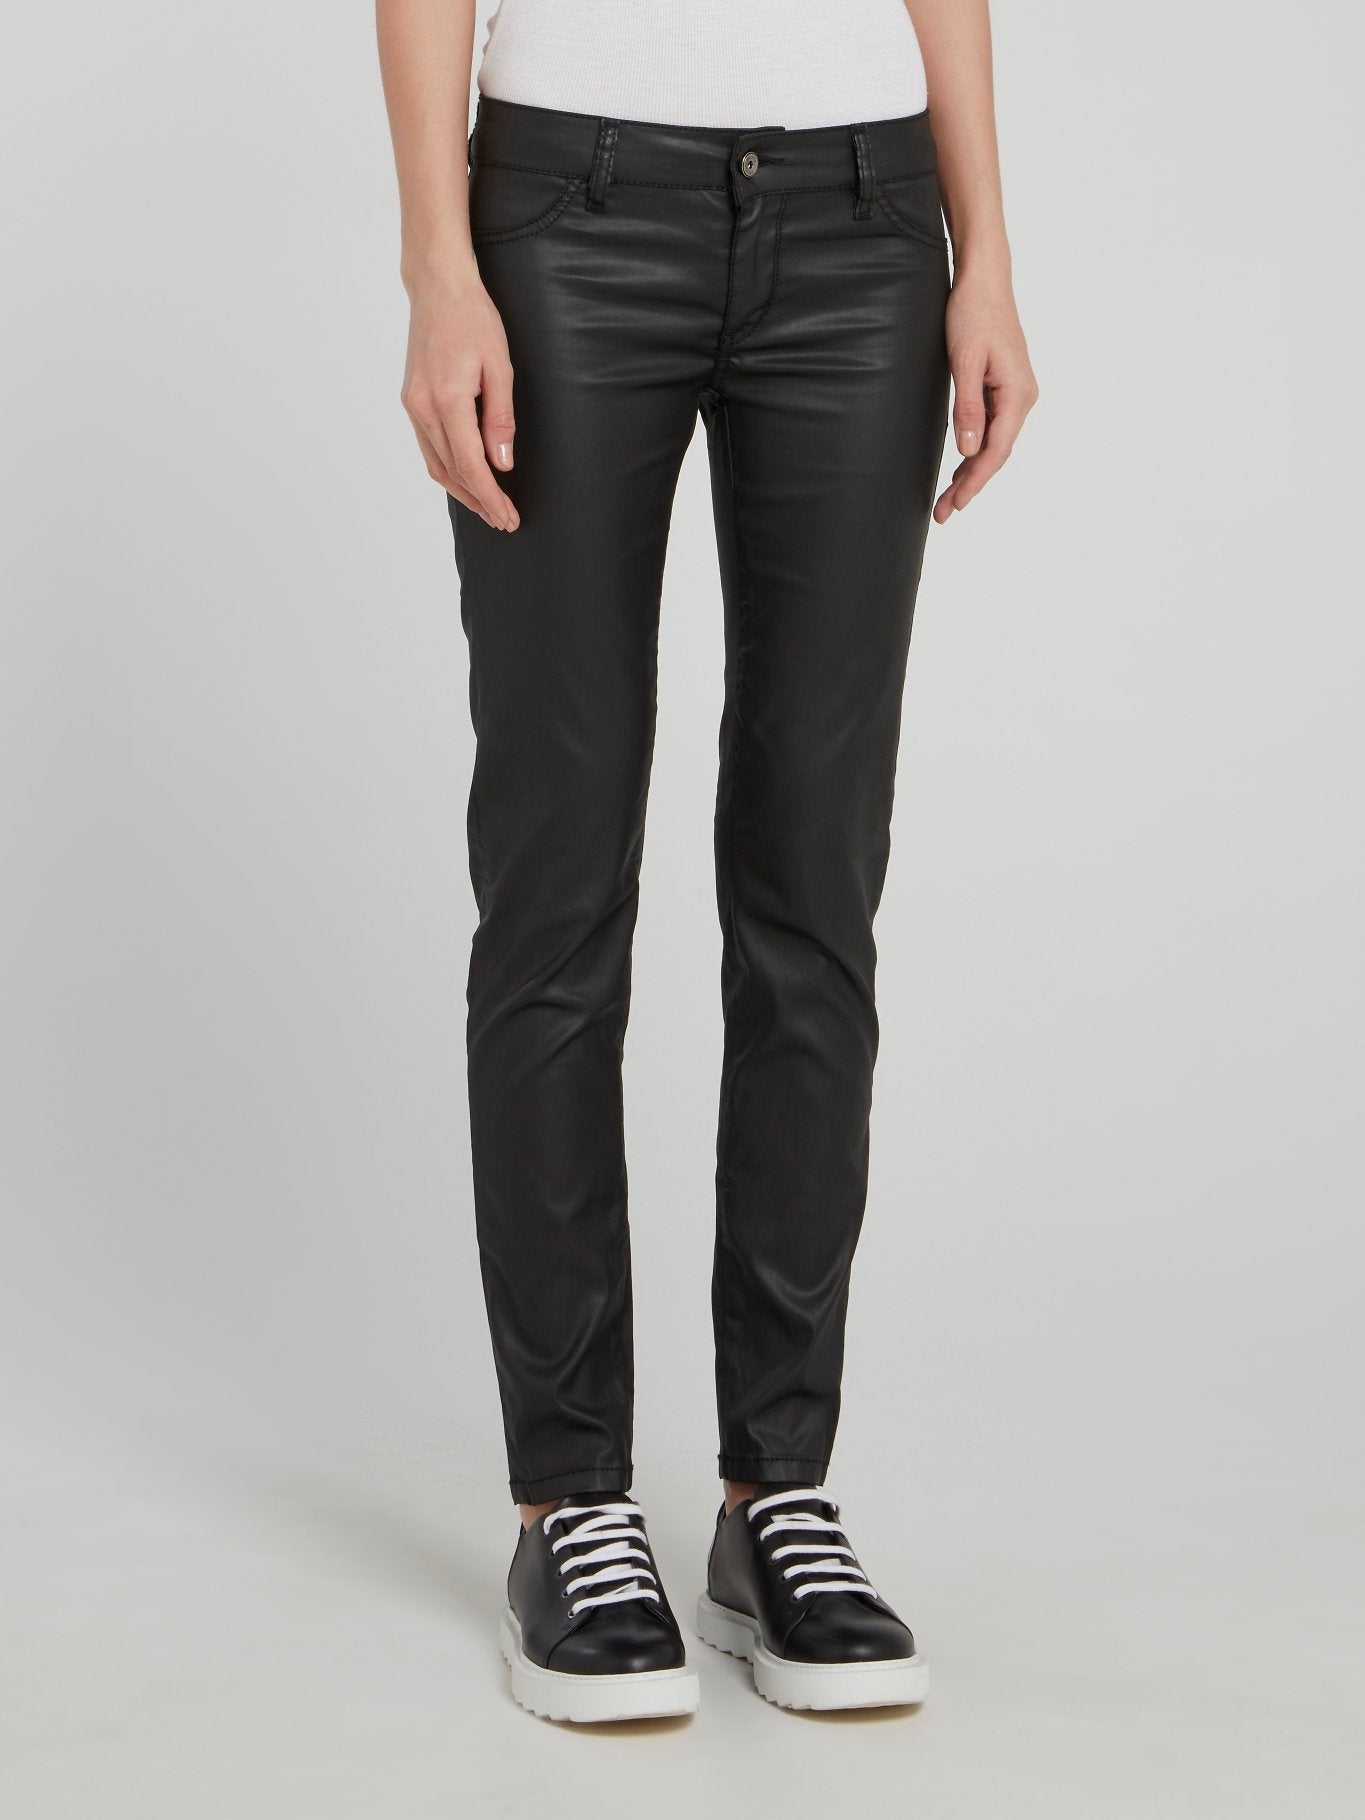 Black Slim Fit Leather Jeans